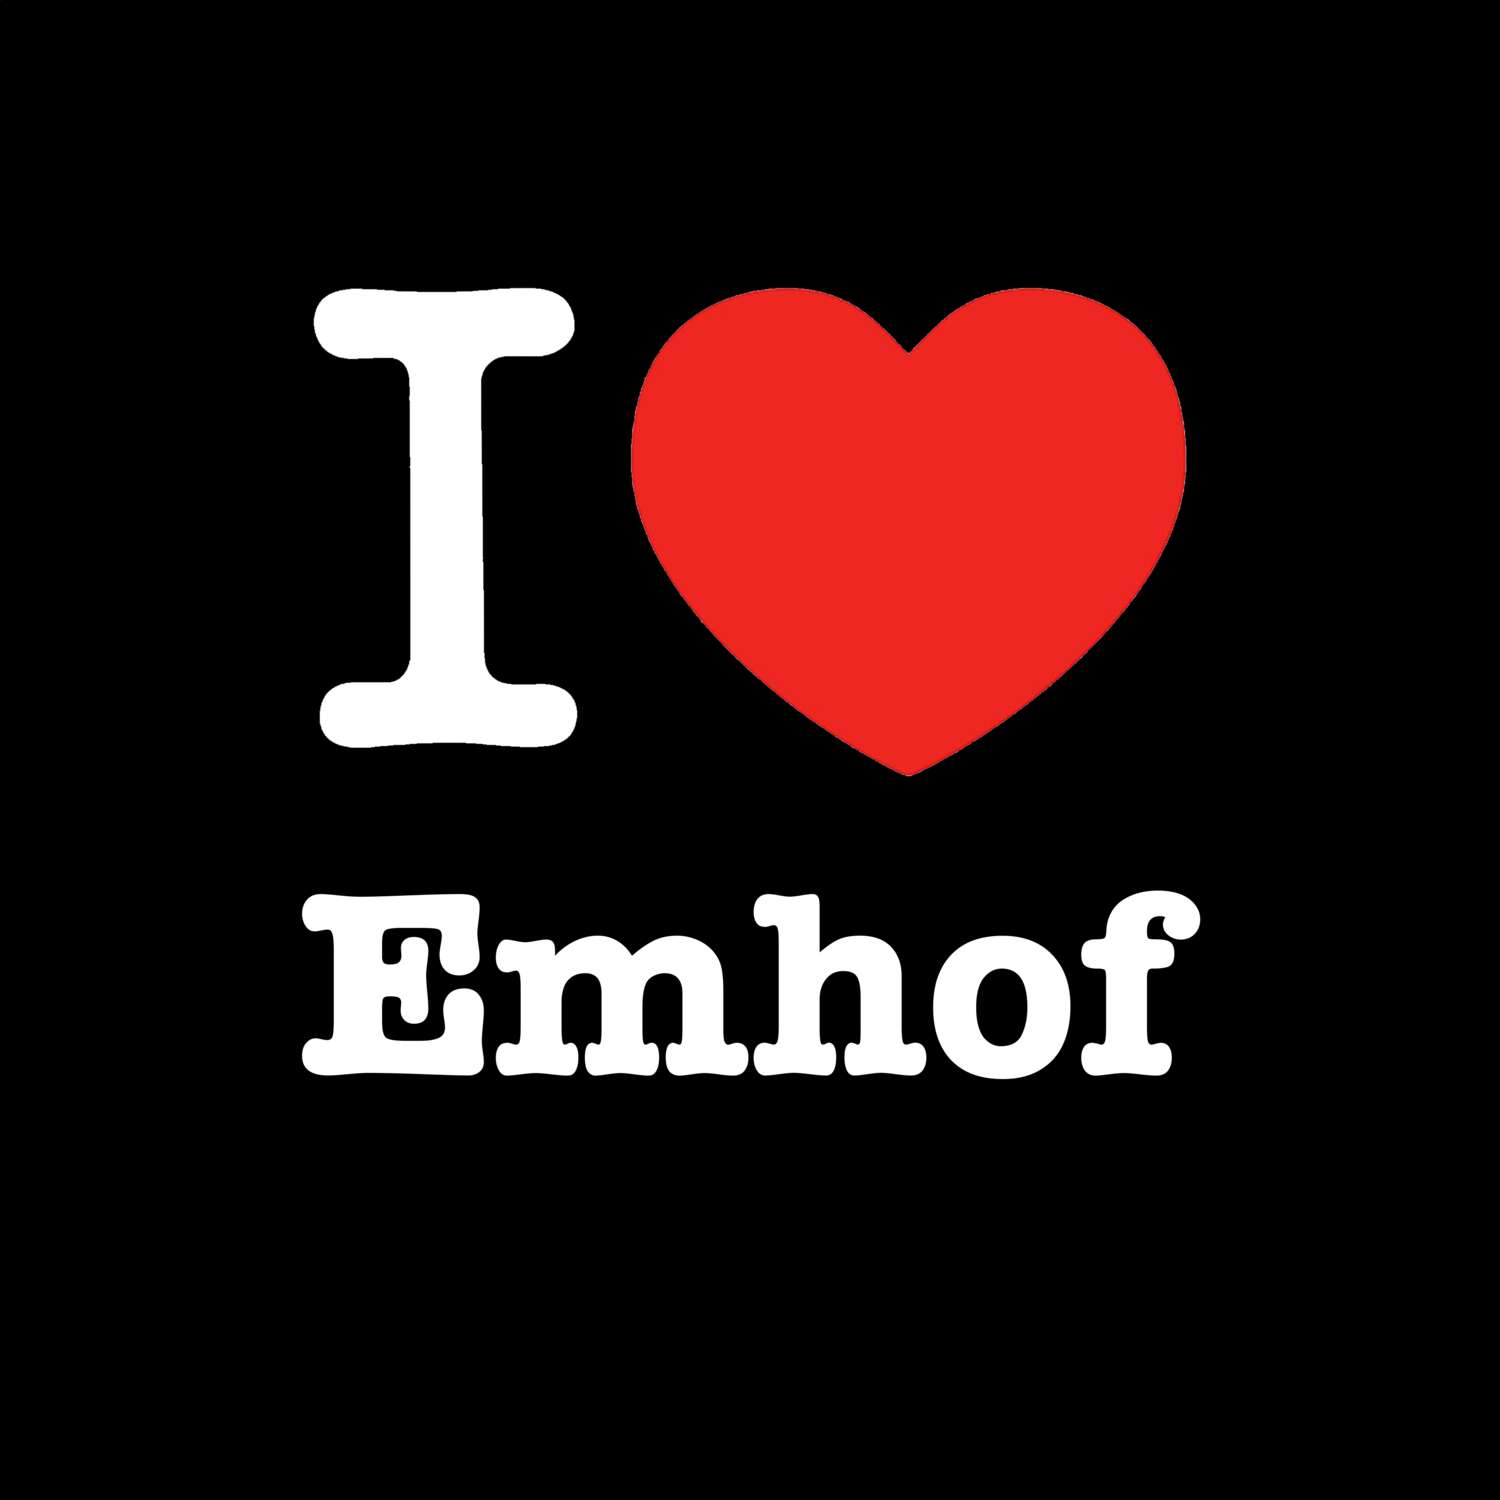 Emhof T-Shirt »I love«